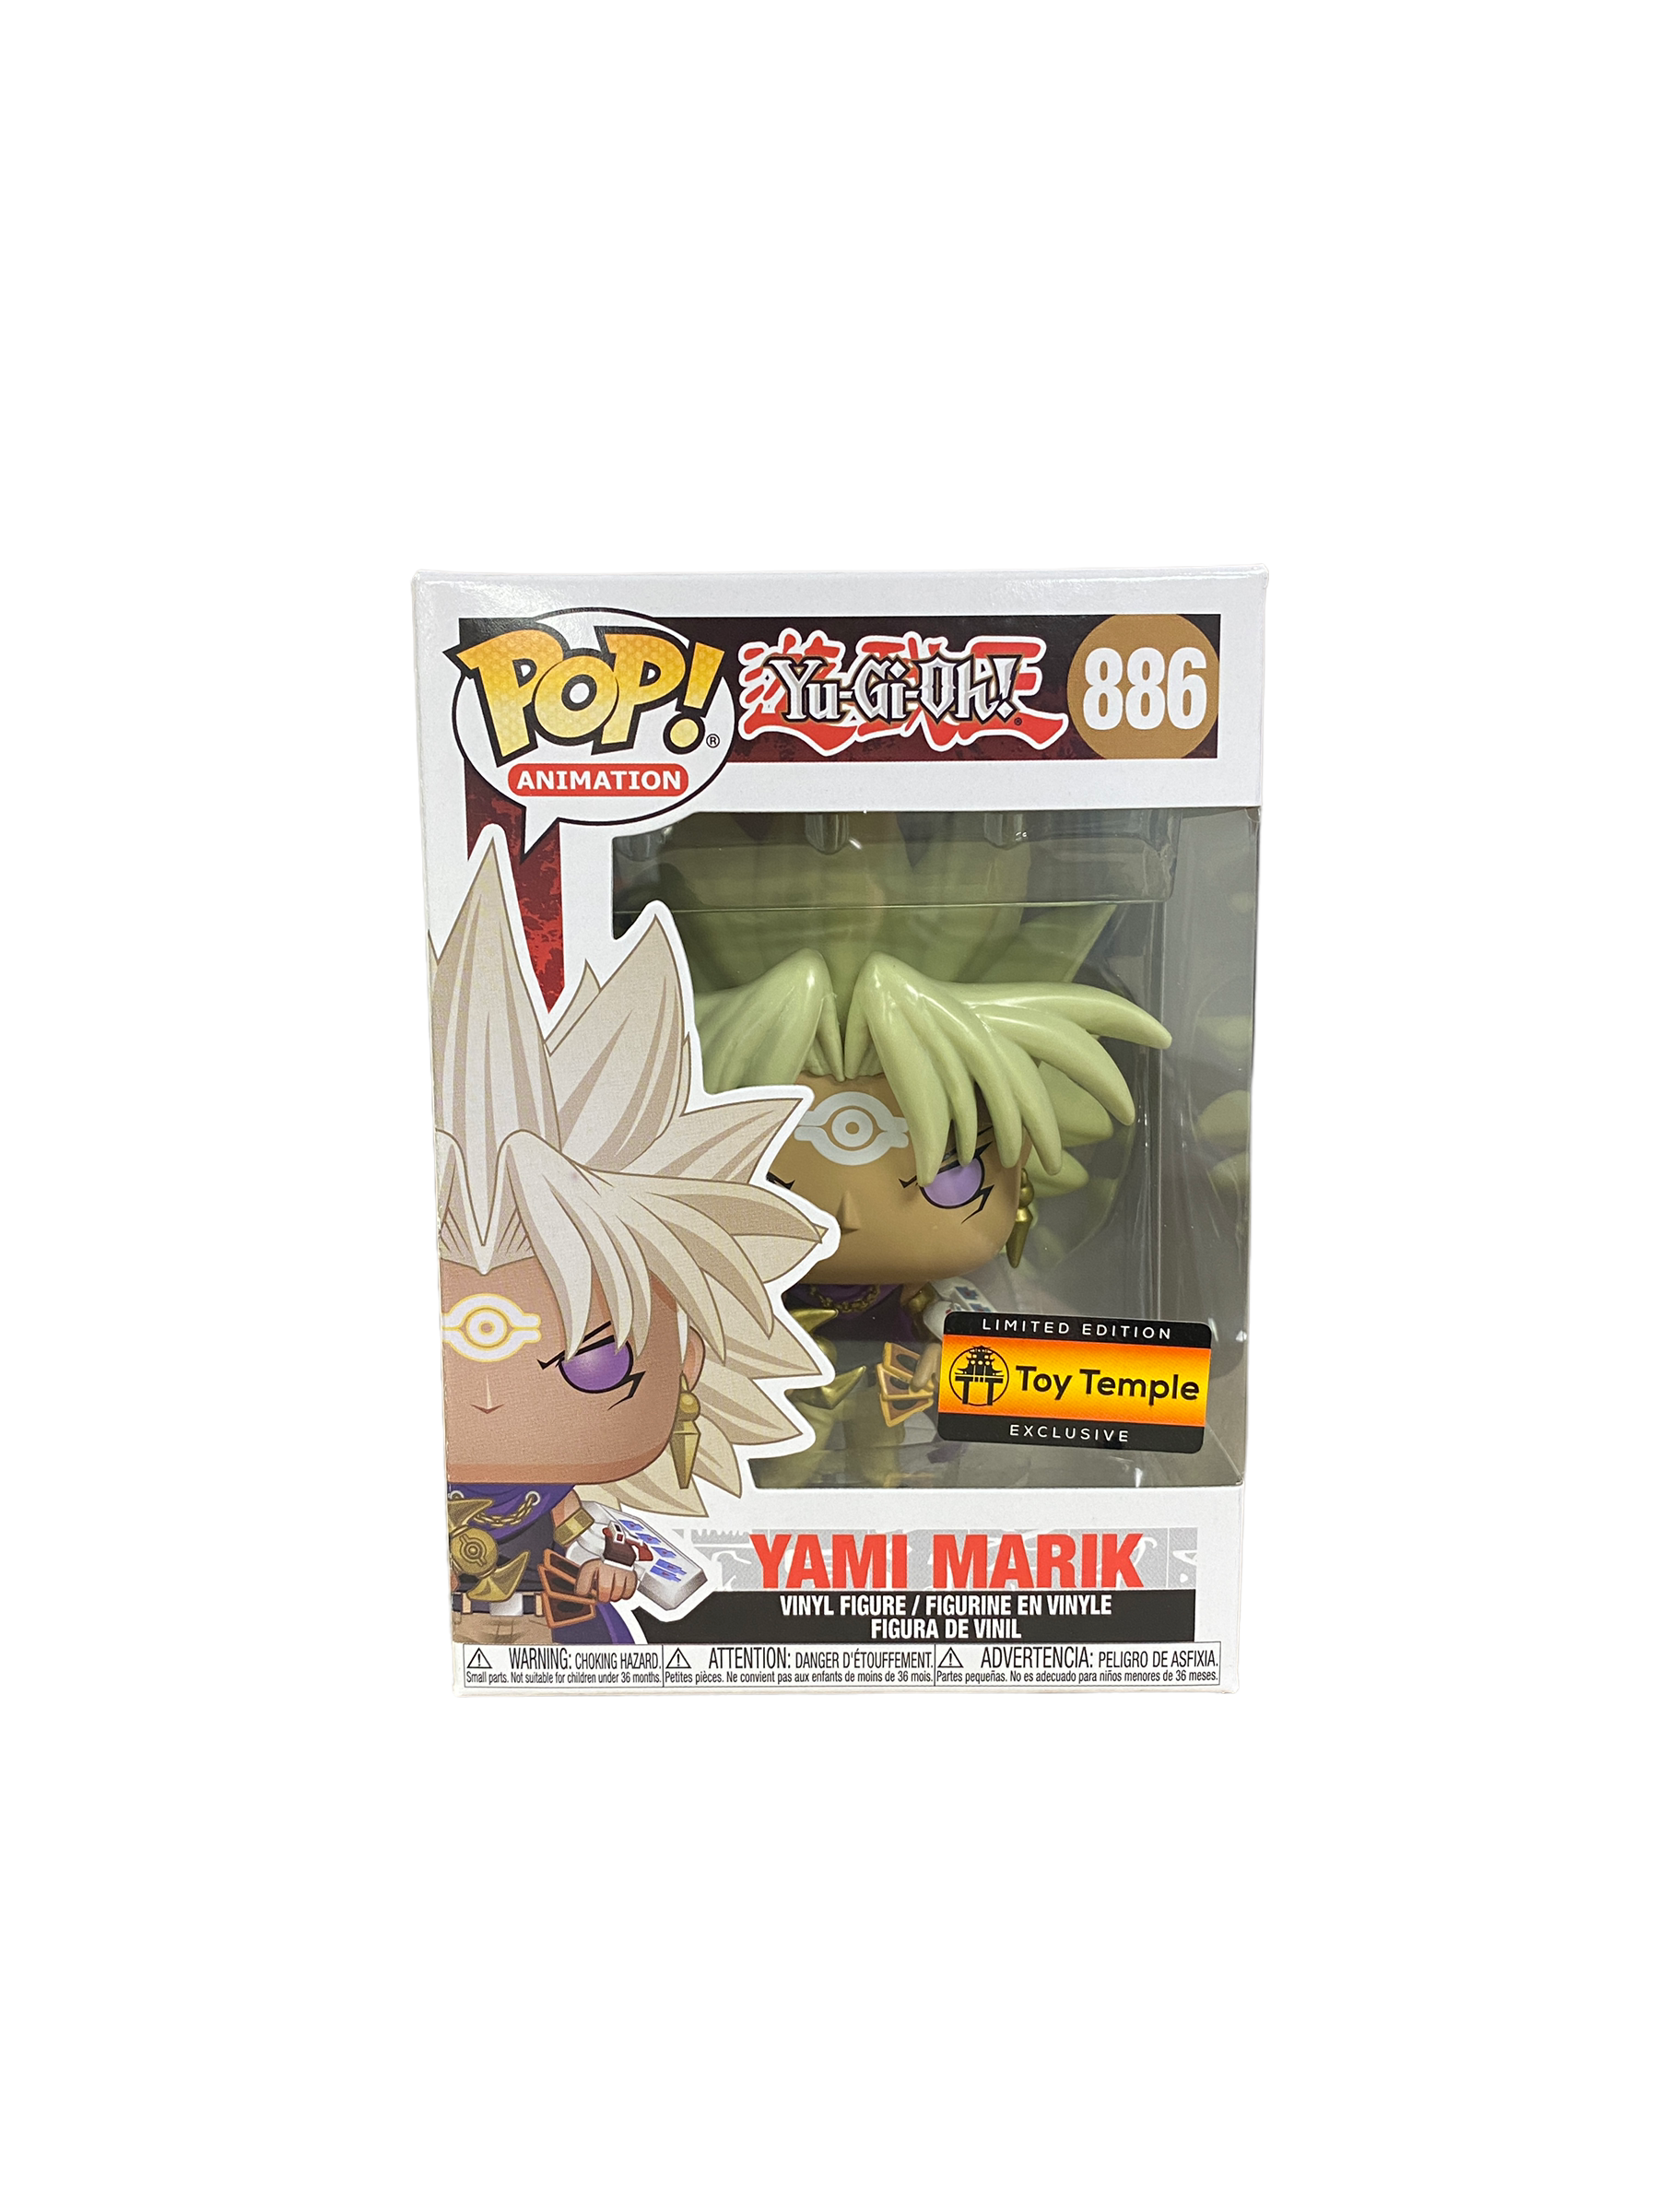 Yami Marik #886 Funko Pop! - Yu-Gi-Oh! - Toy Temple Exclusive - Condition 9.5+/10